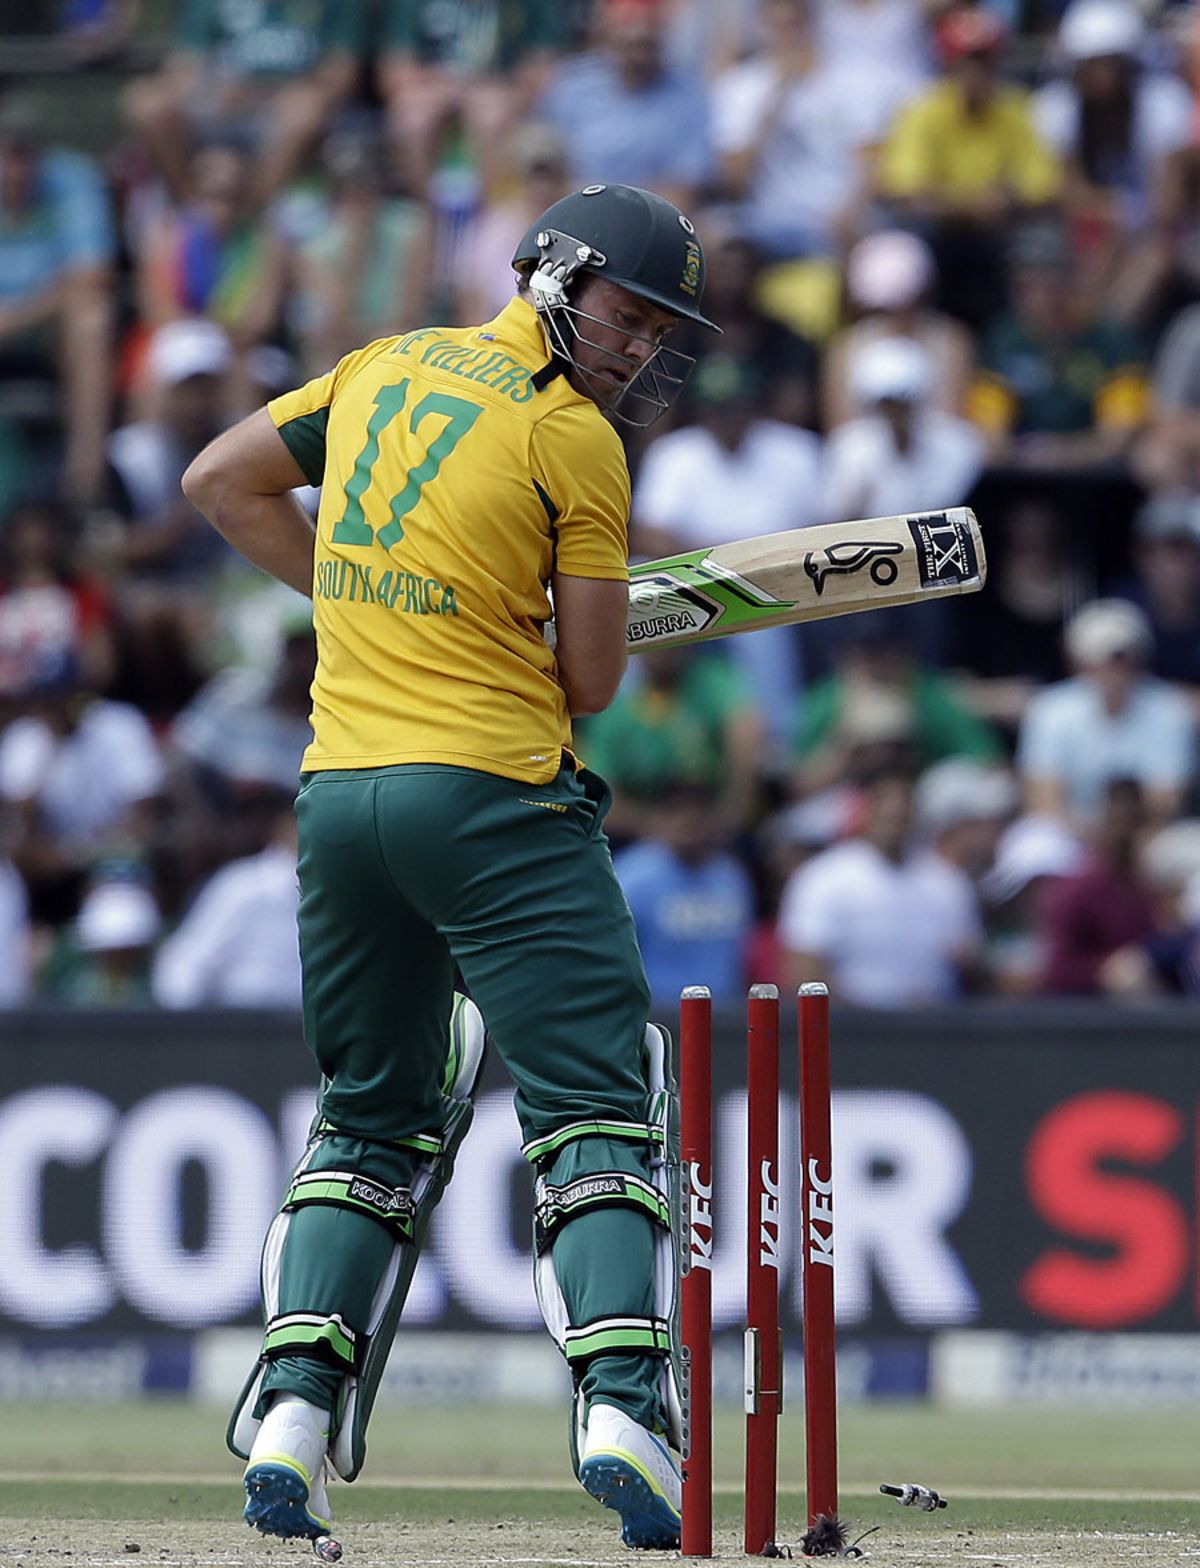 AB de Villiers chopped on against John Hastings, South Africa v Australia, 2nd T20, Johannesburg, March 6, 2016